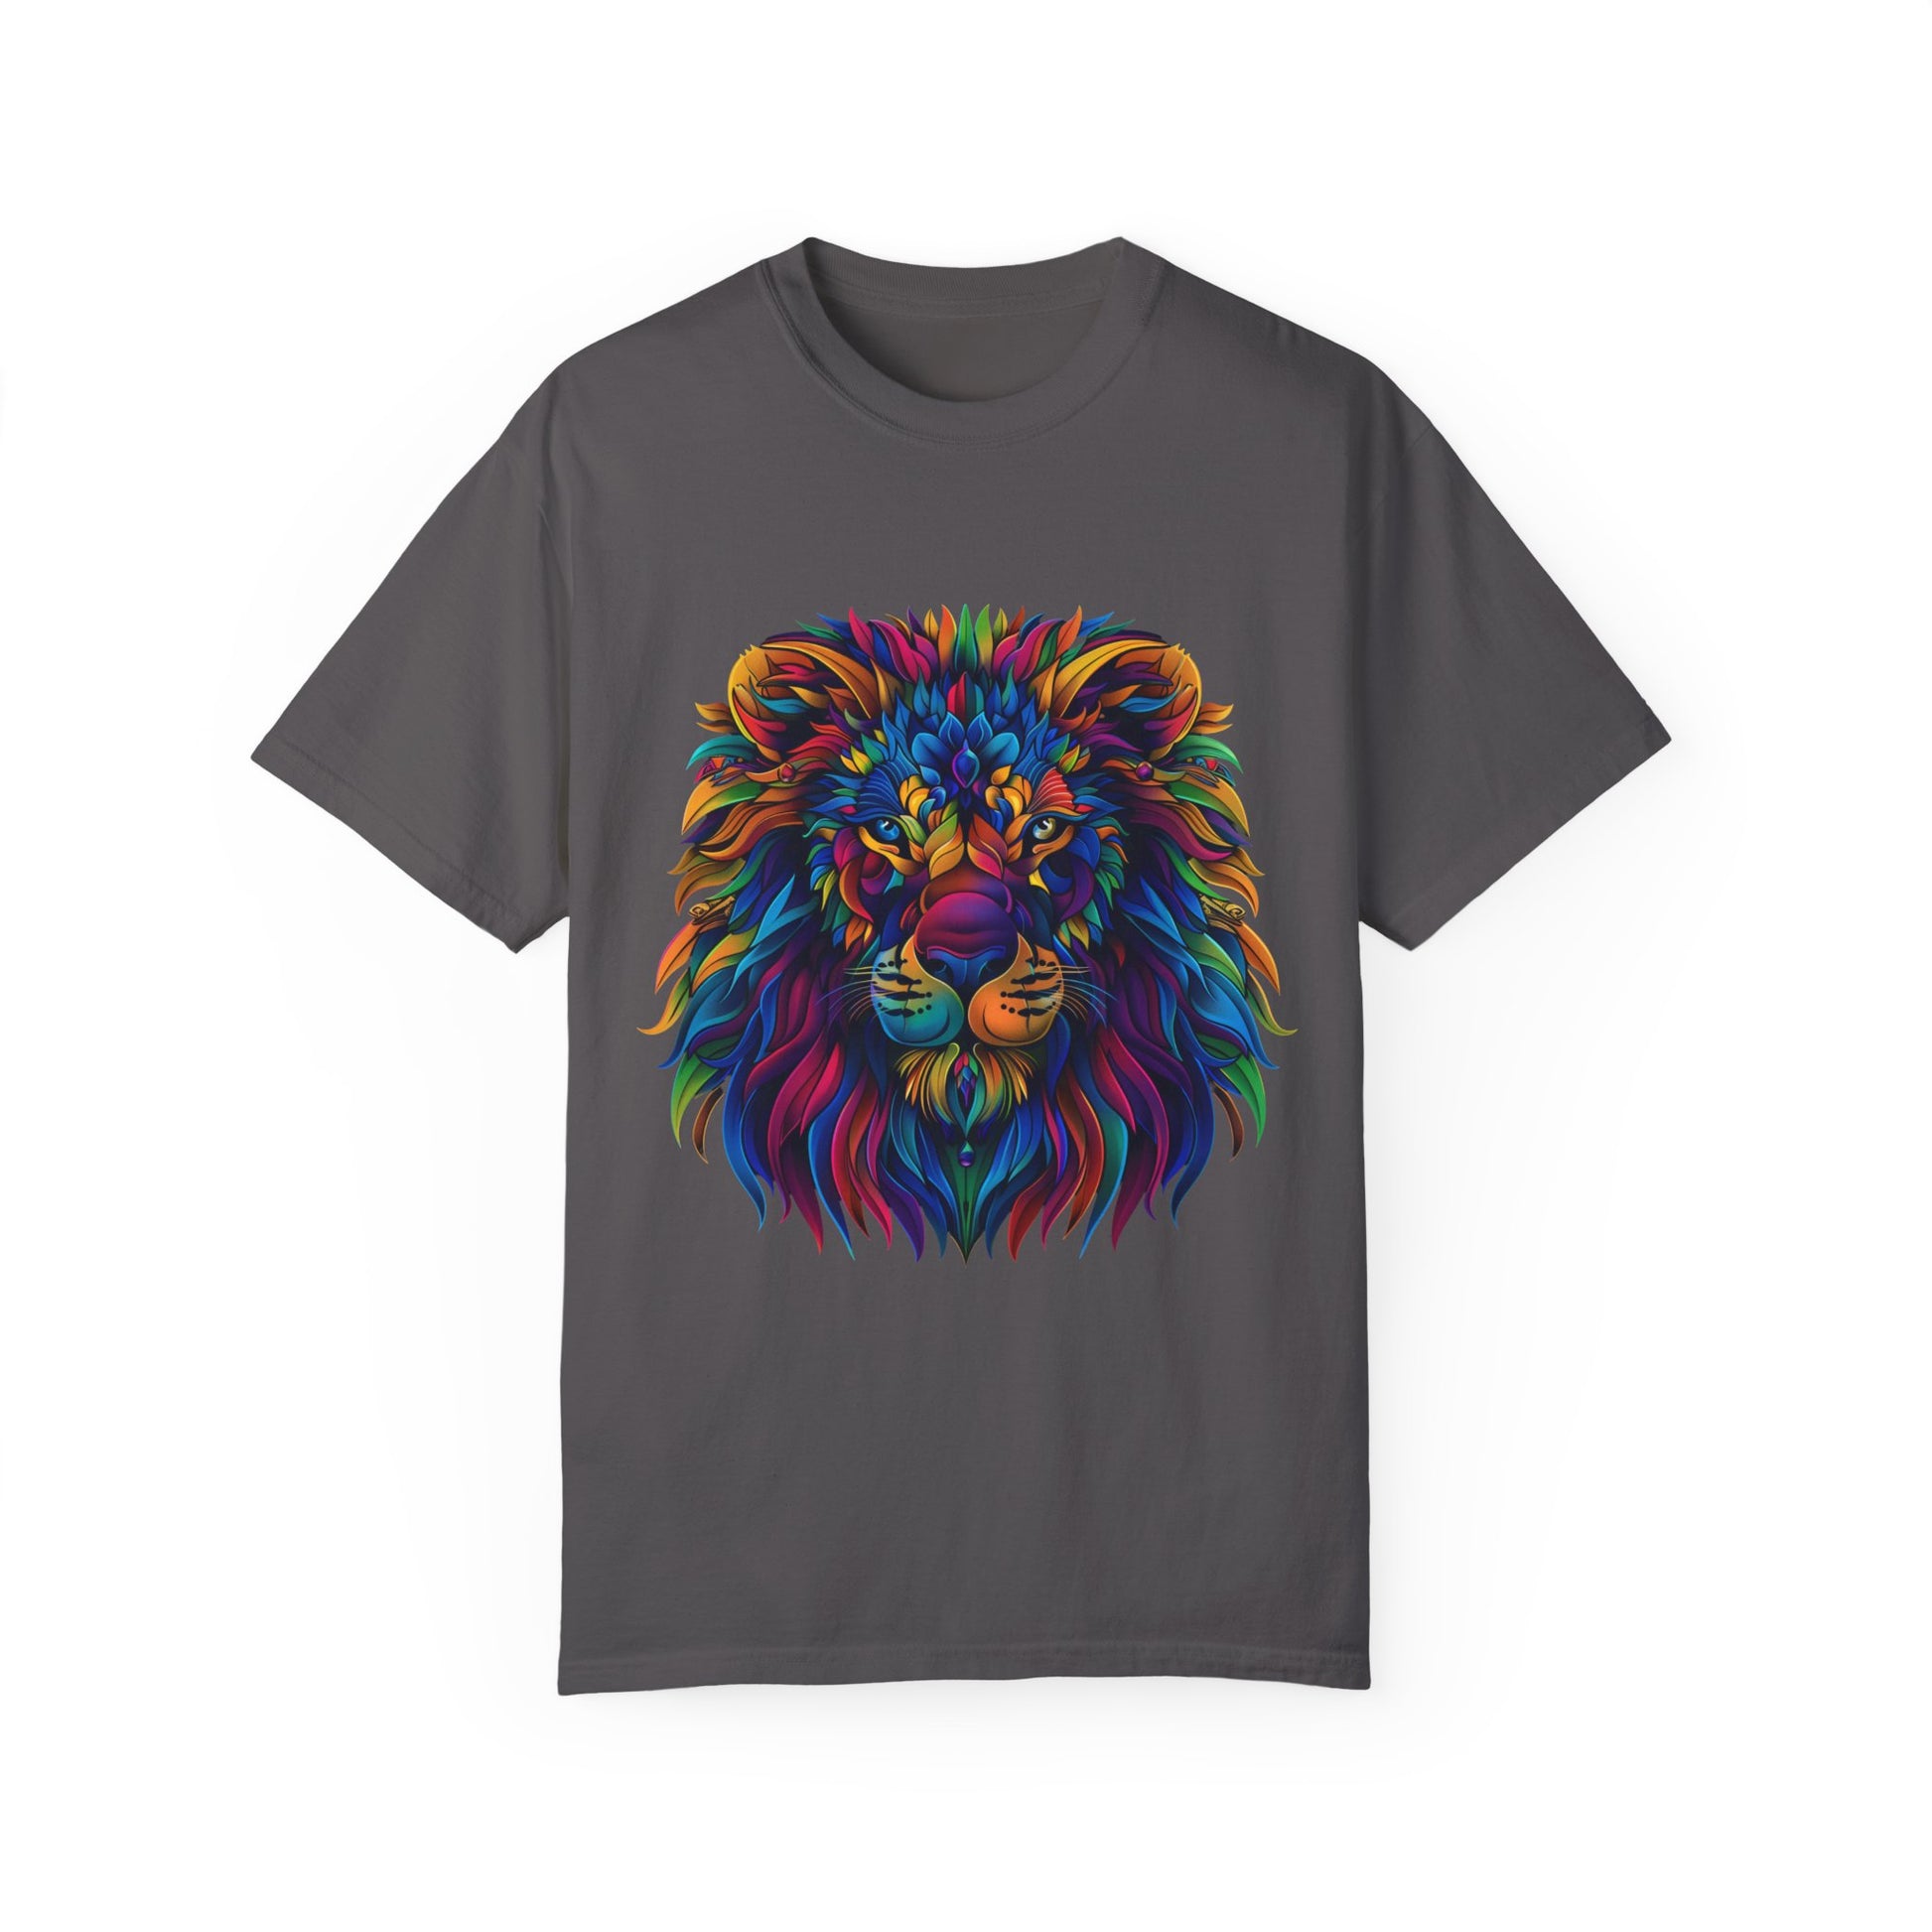 Lion Head Cool Graphic Design Novelty Unisex Garment-dyed T-shirt Cotton Funny Humorous Graphic Soft Premium Unisex Men Women Graphite T-shirt Birthday Gift-8